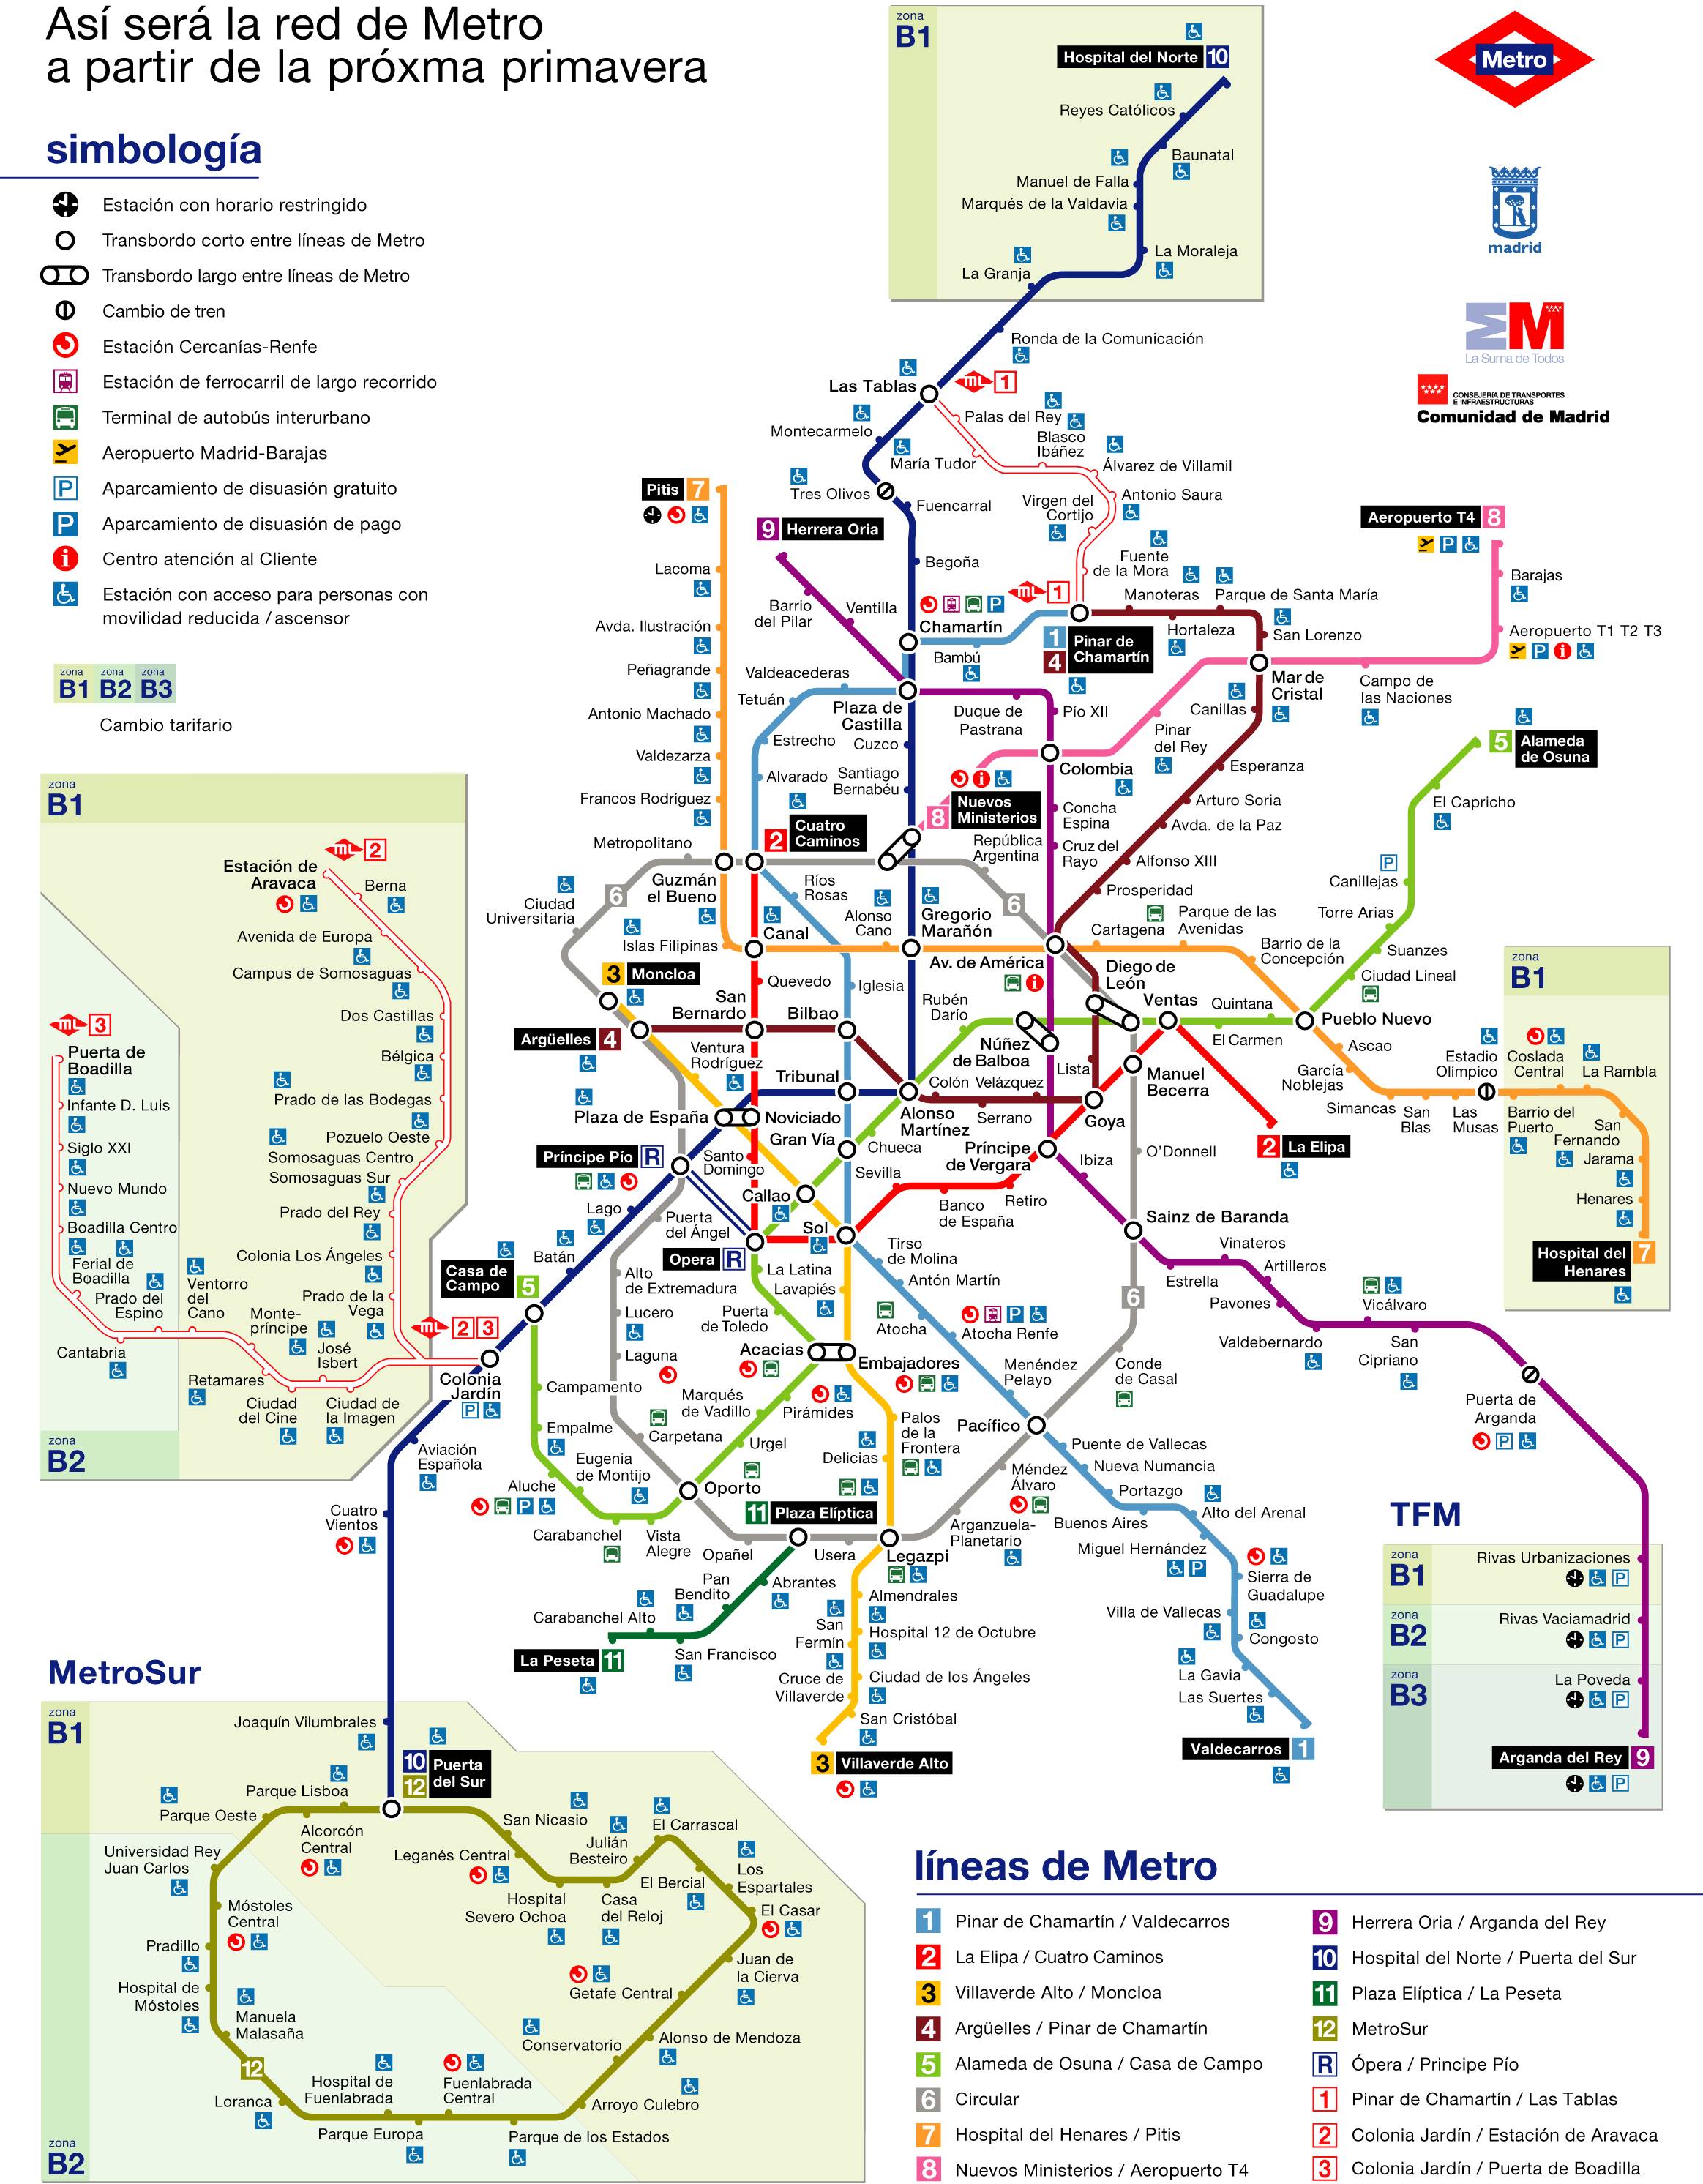 Madrid subway 2007 - Full size | Gifex